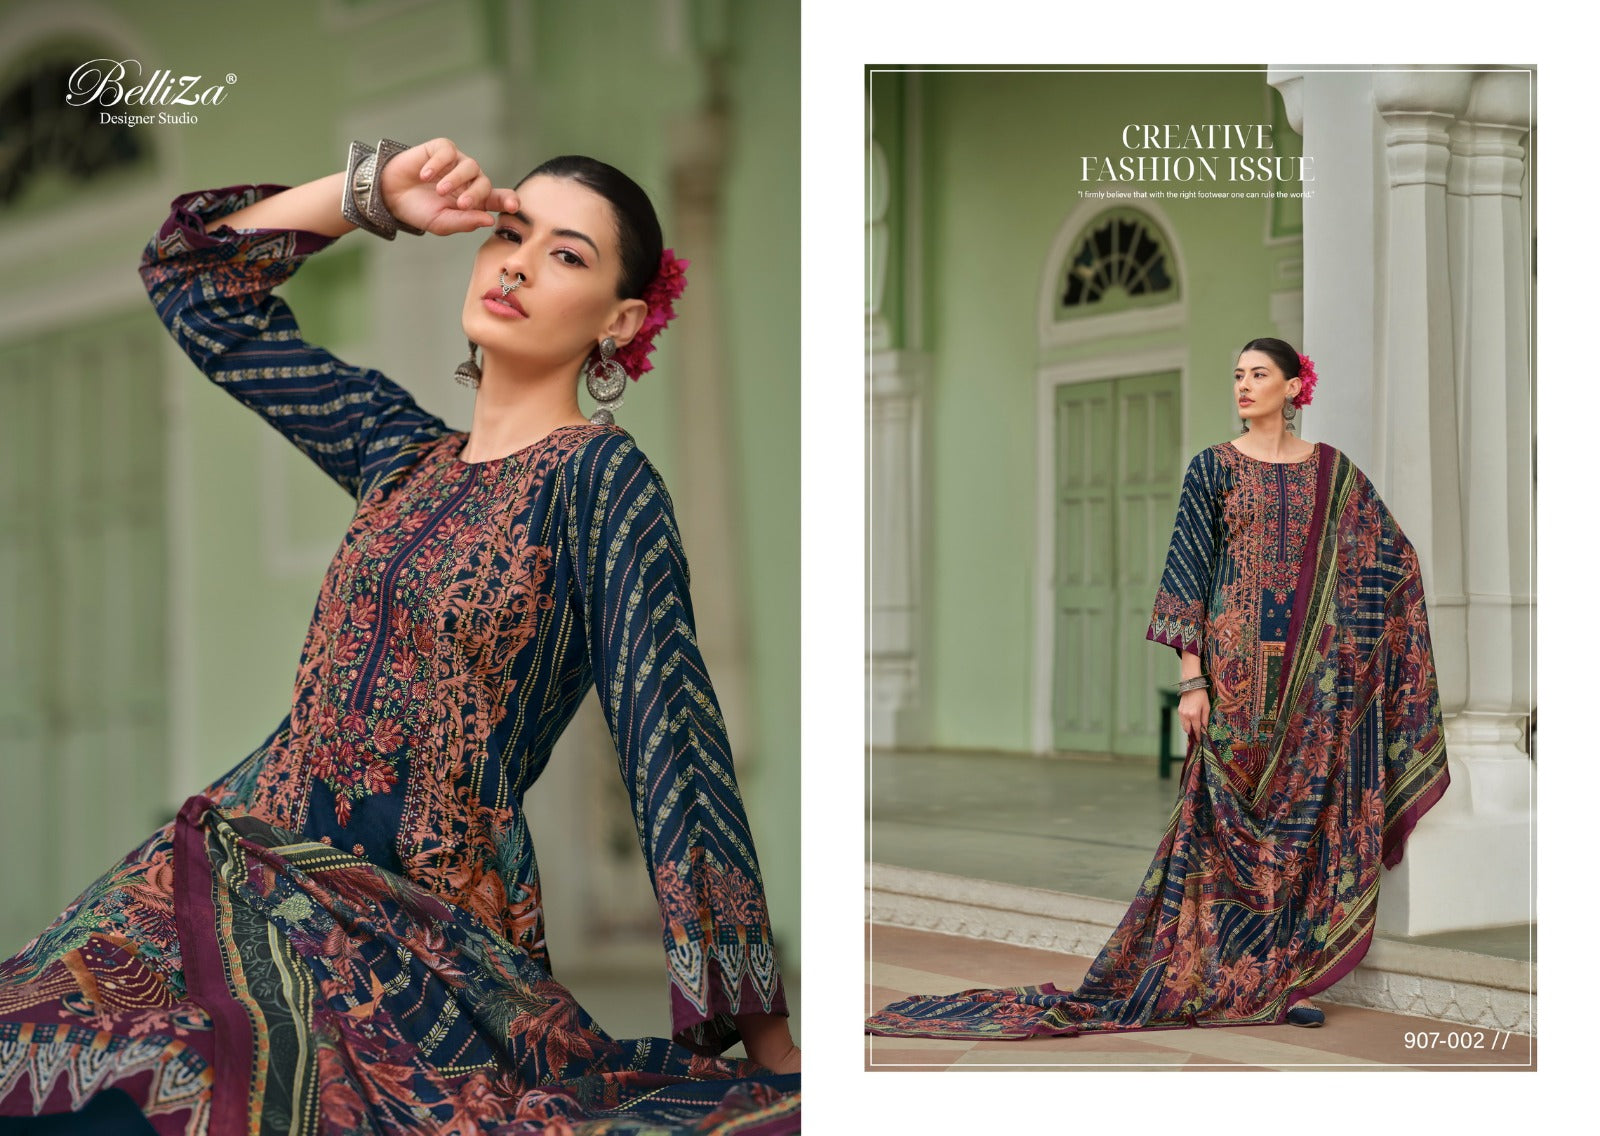 Naira Vol 47 Belliza Designer Studio Cotton Karachi Salwar Suits